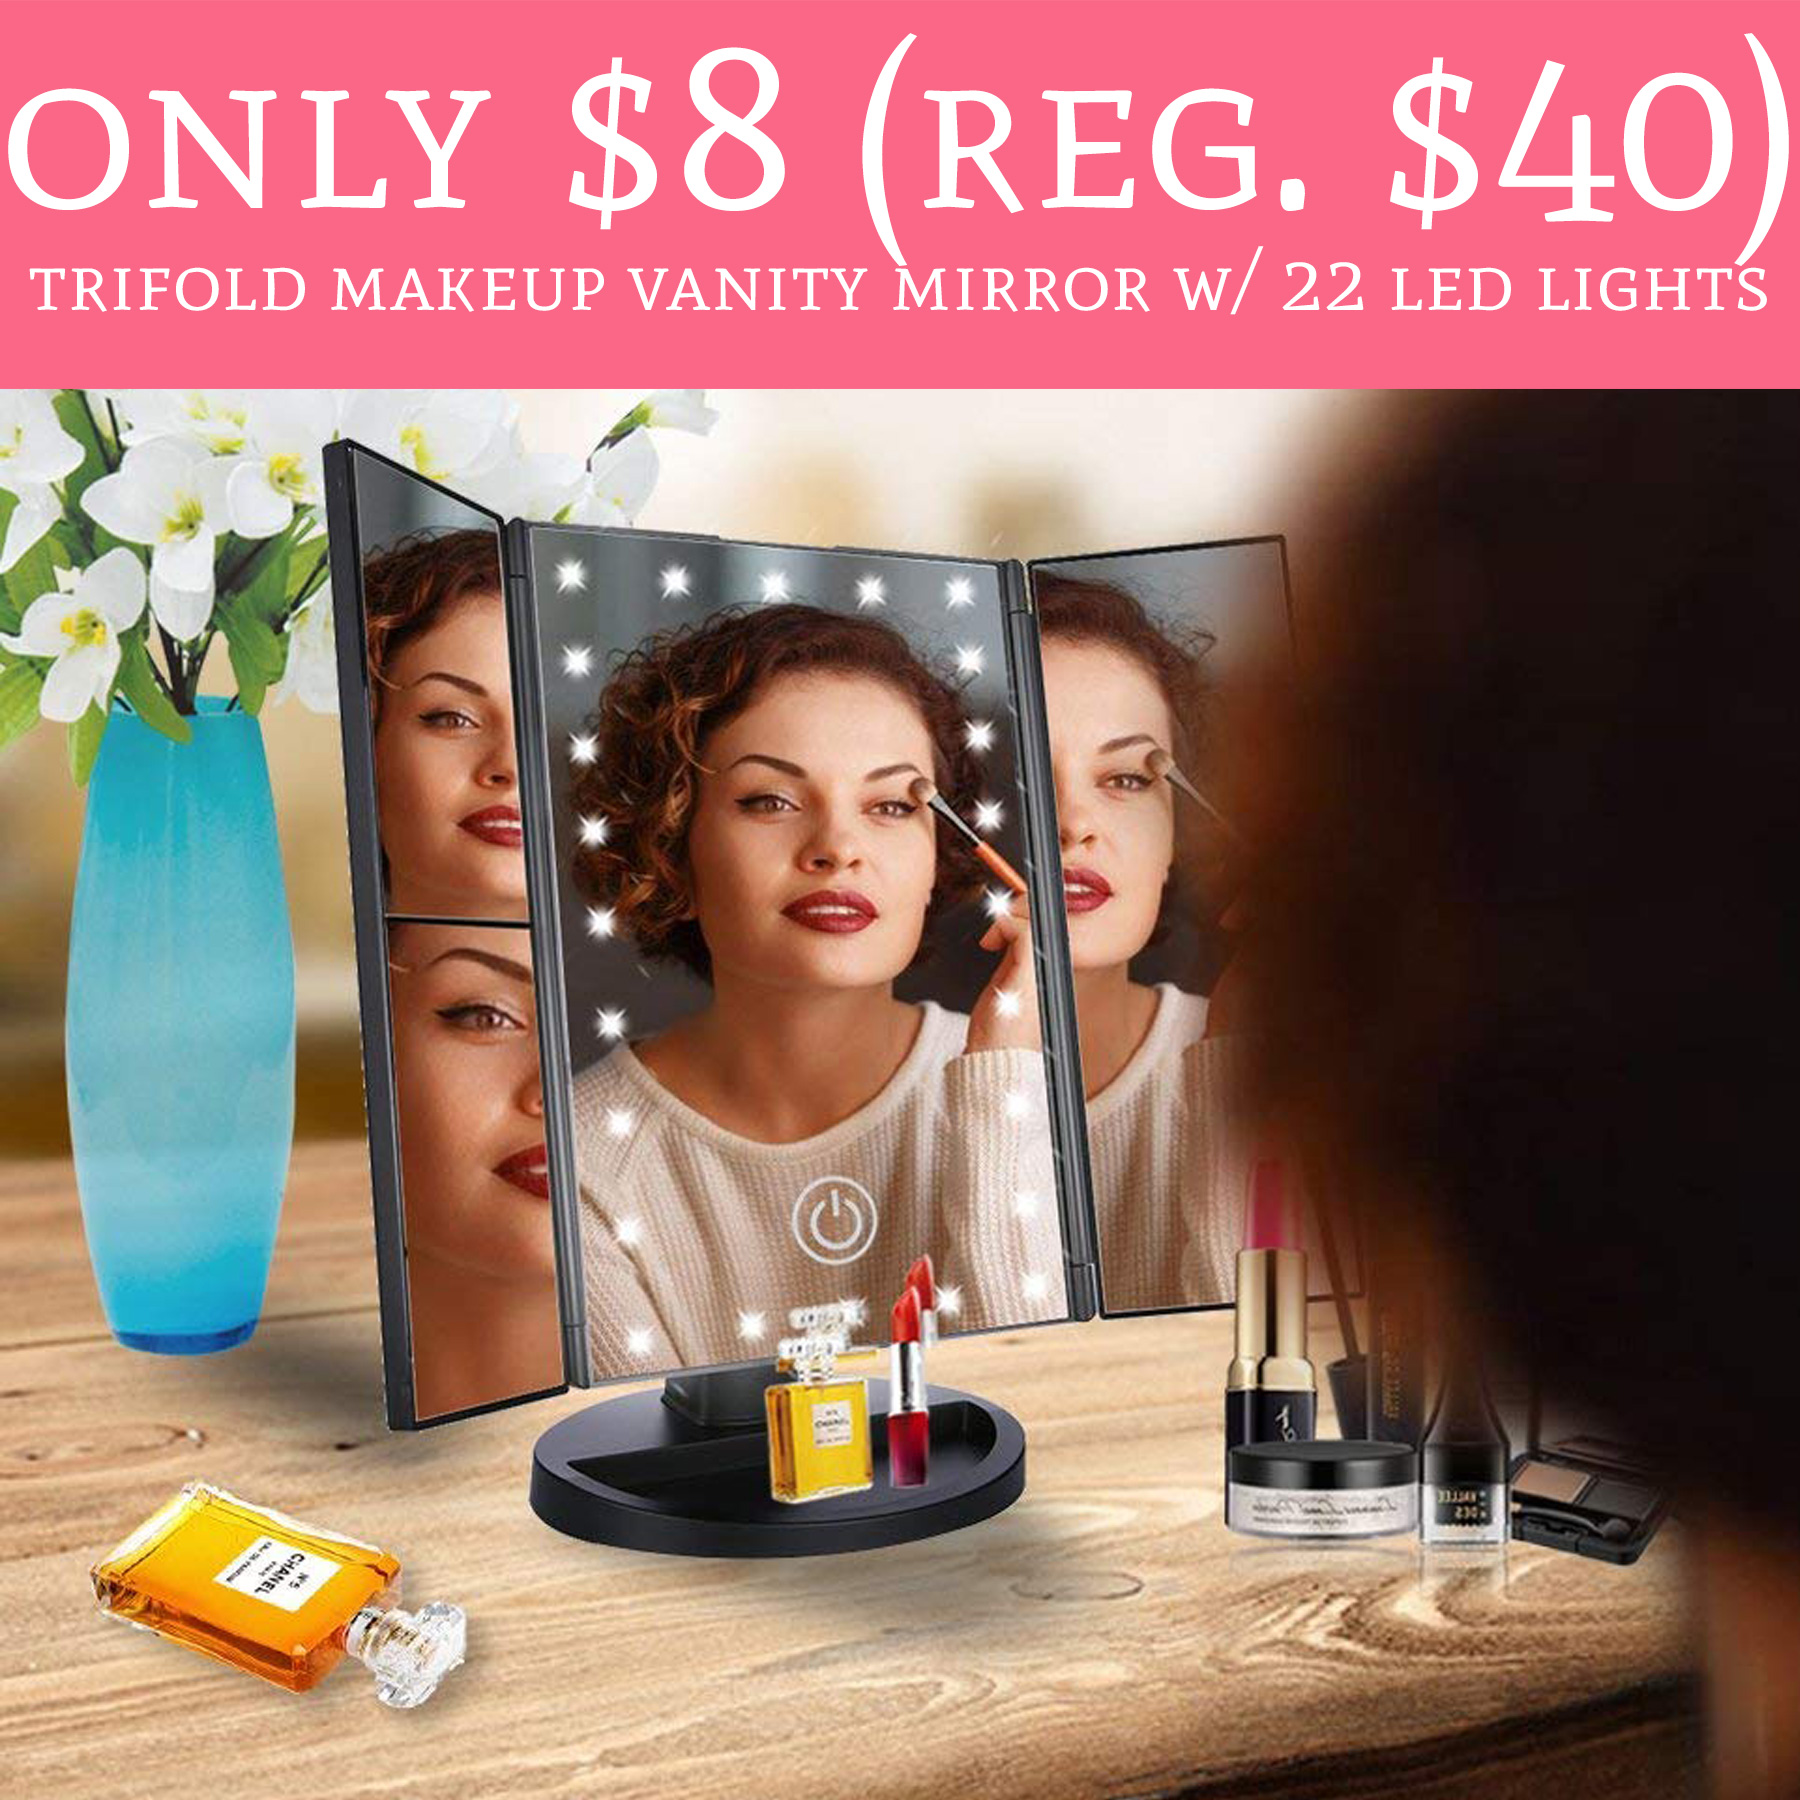 trifold-makeup-vanity-mirror-22-led-lights